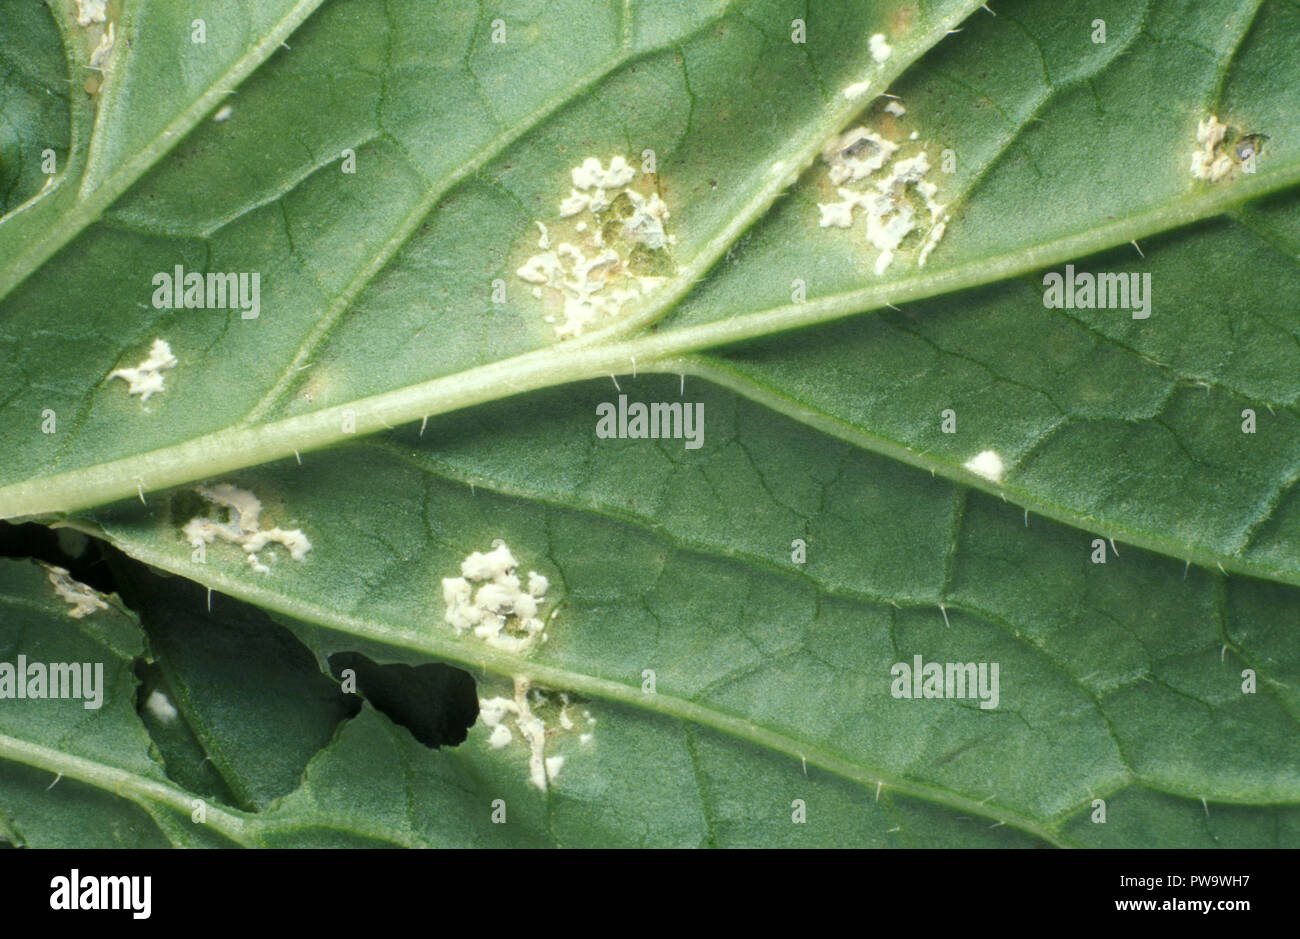 Close up of fungal disease on a turnip leaf (Brassica rapa) Stock Photo